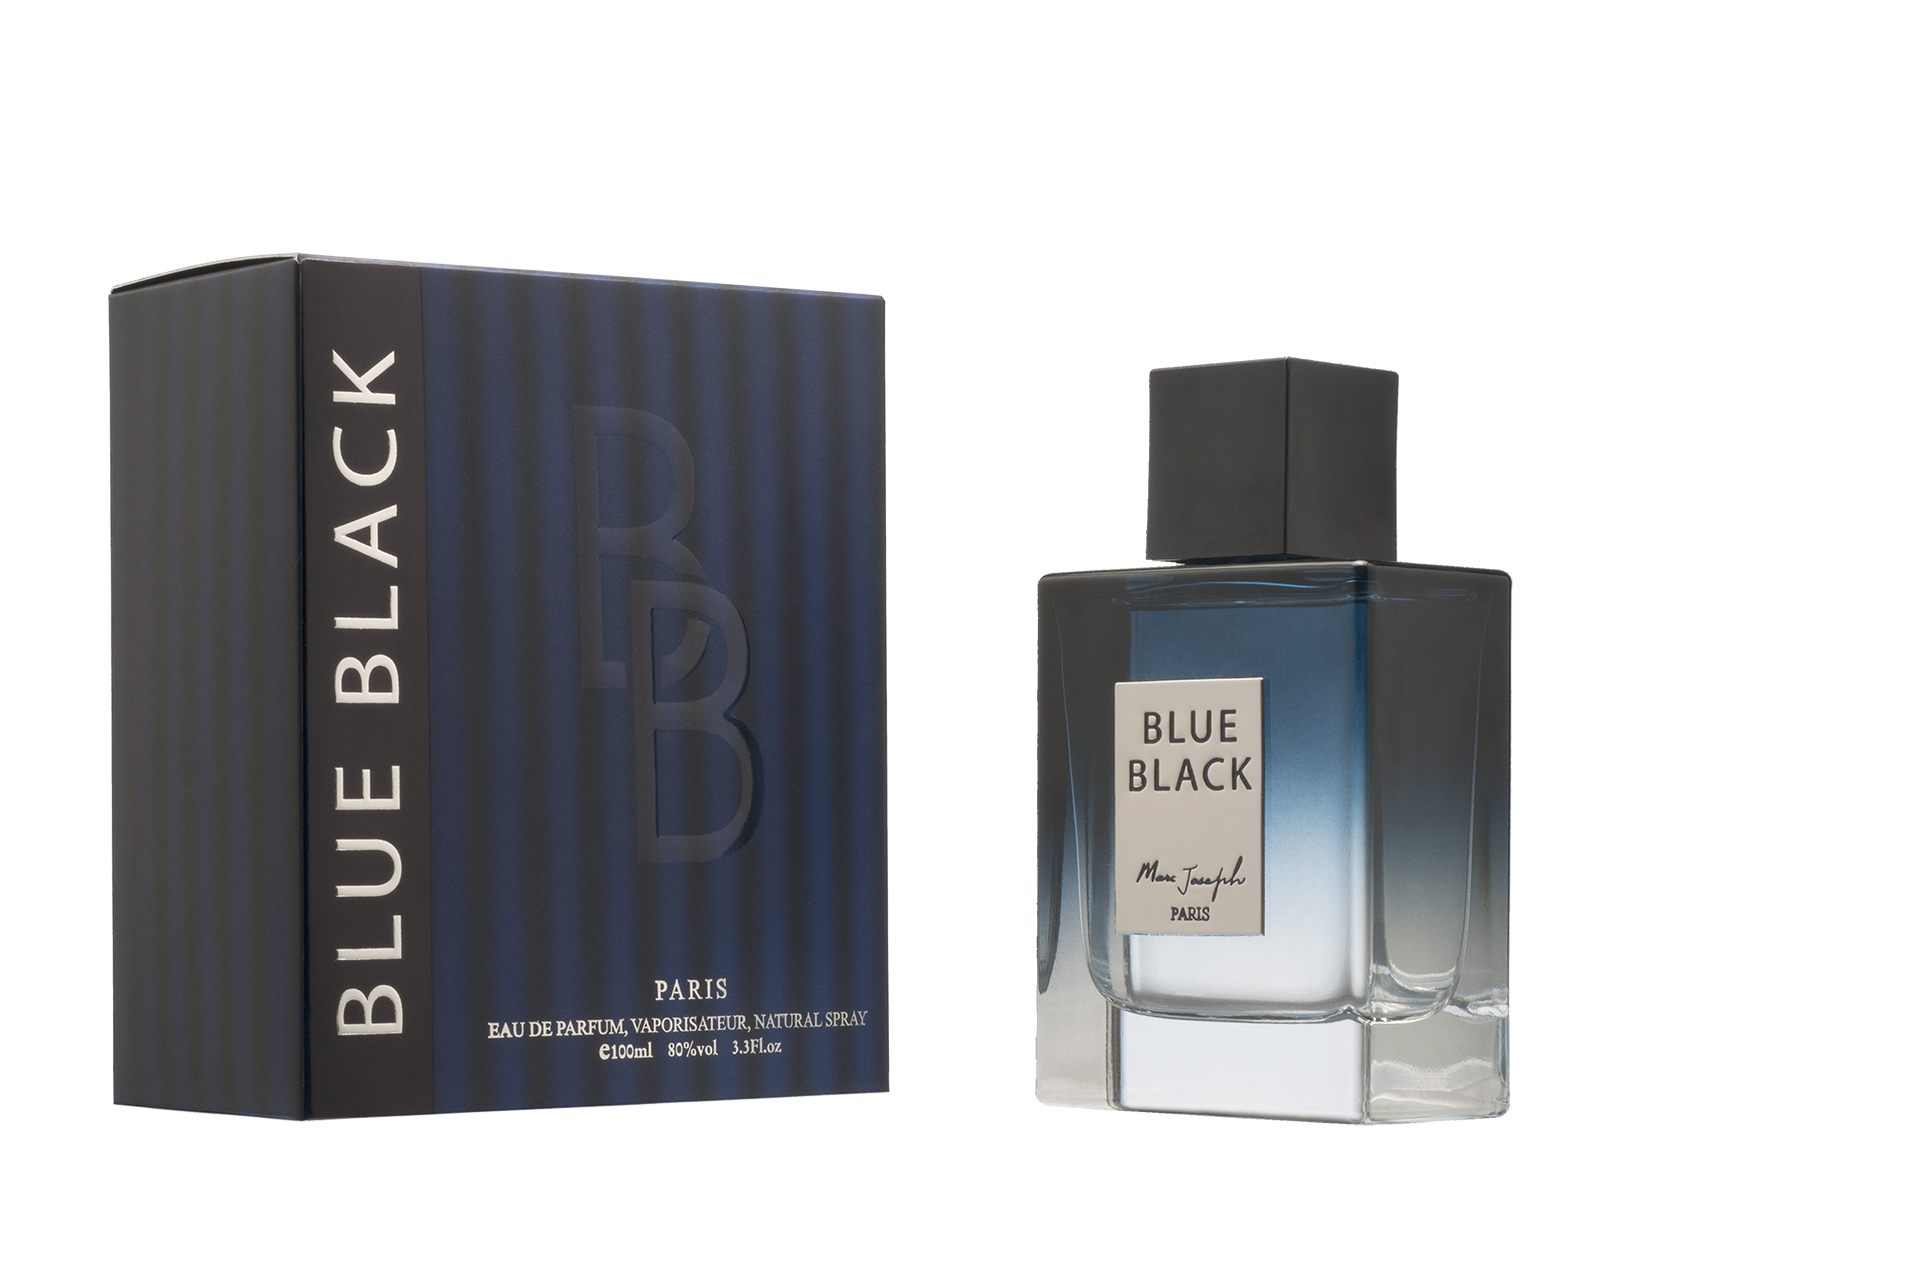 Blue Black Marc Joseph cologne - a fragrance for men